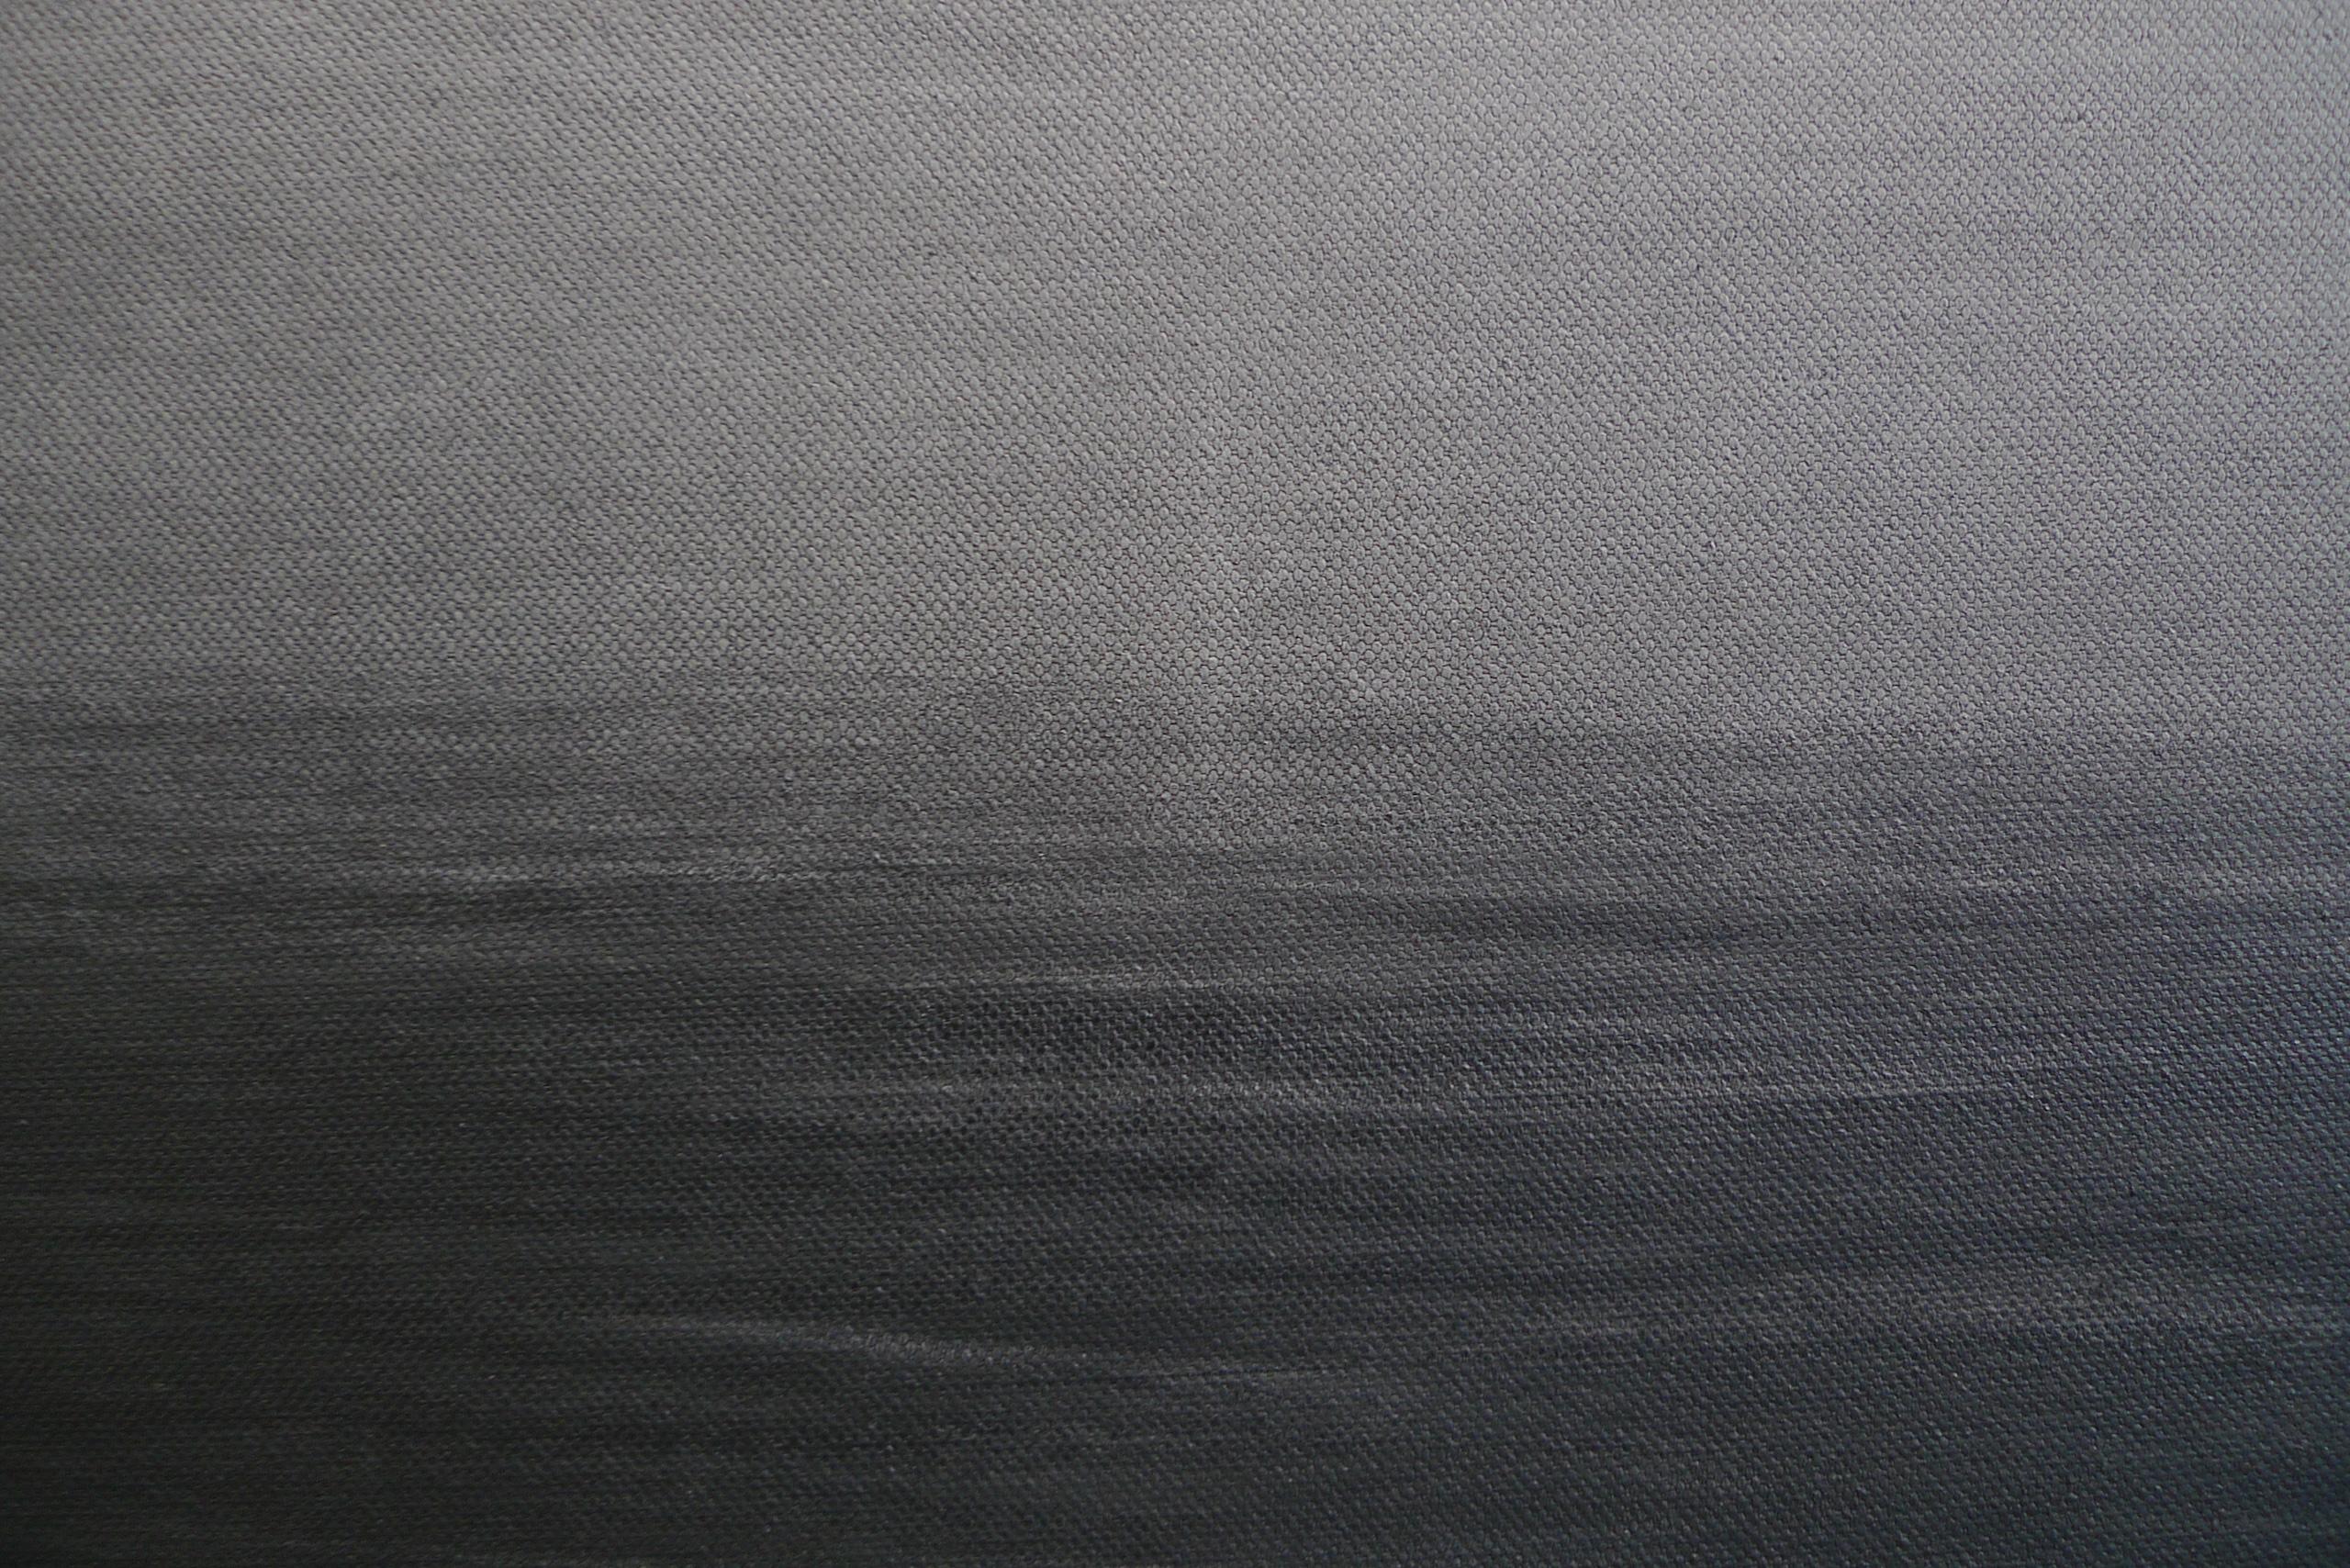 Astre by Franco Salas Borquez - Contemporary seascape painting, waves, dark tone For Sale 5